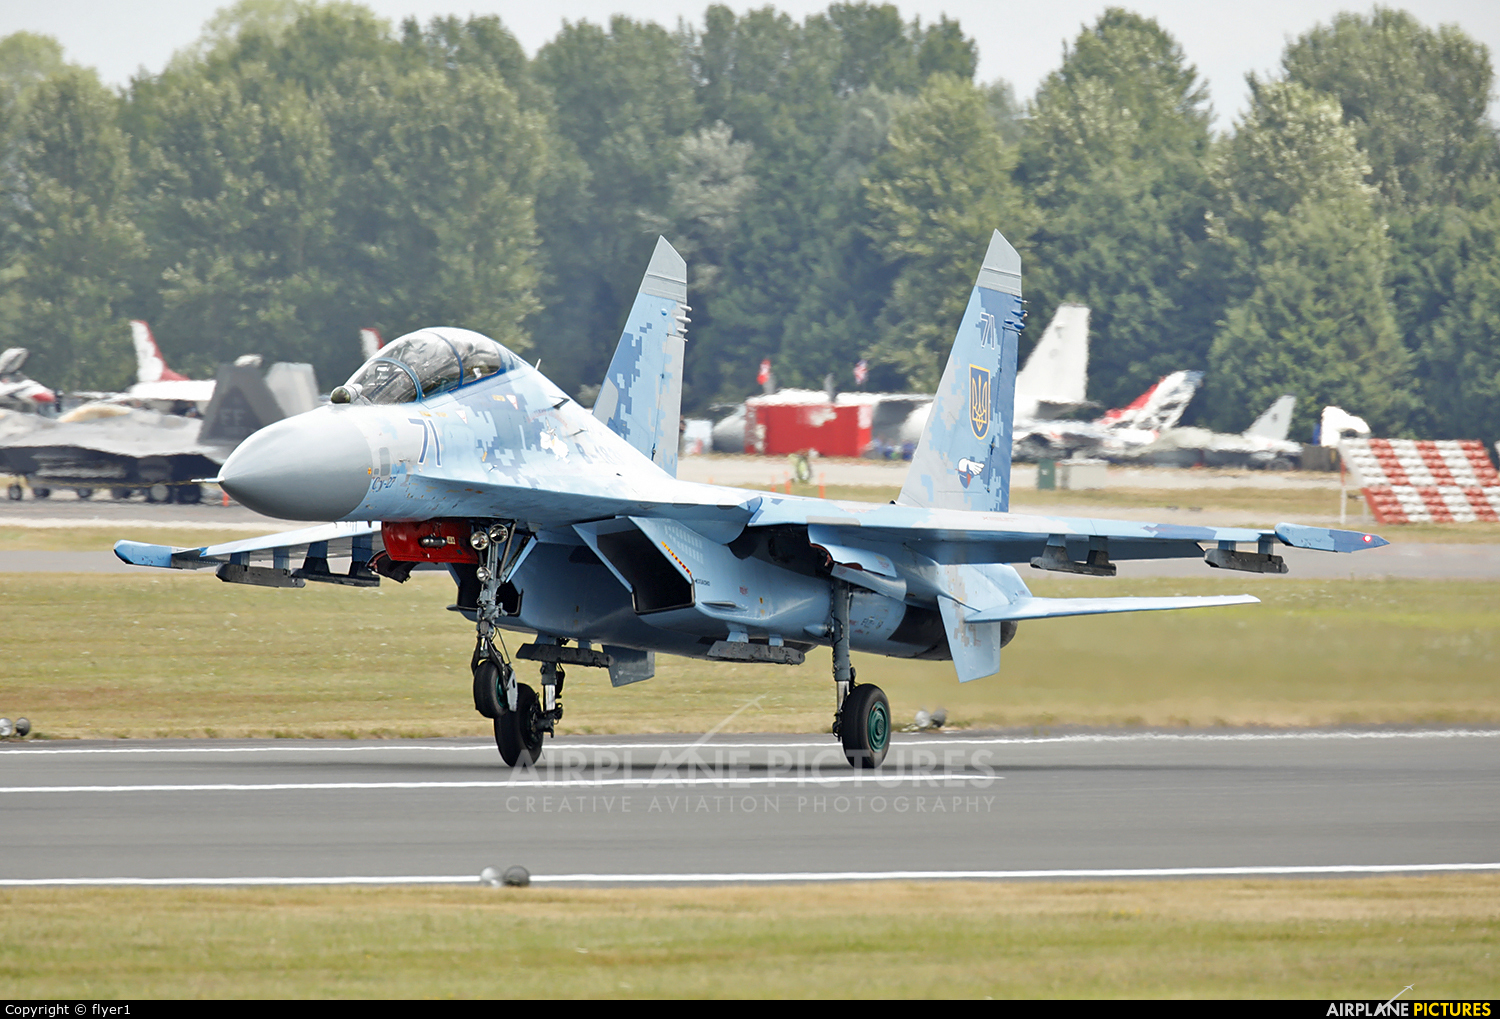 Ukraine - Air Force 71 aircraft at Fairford